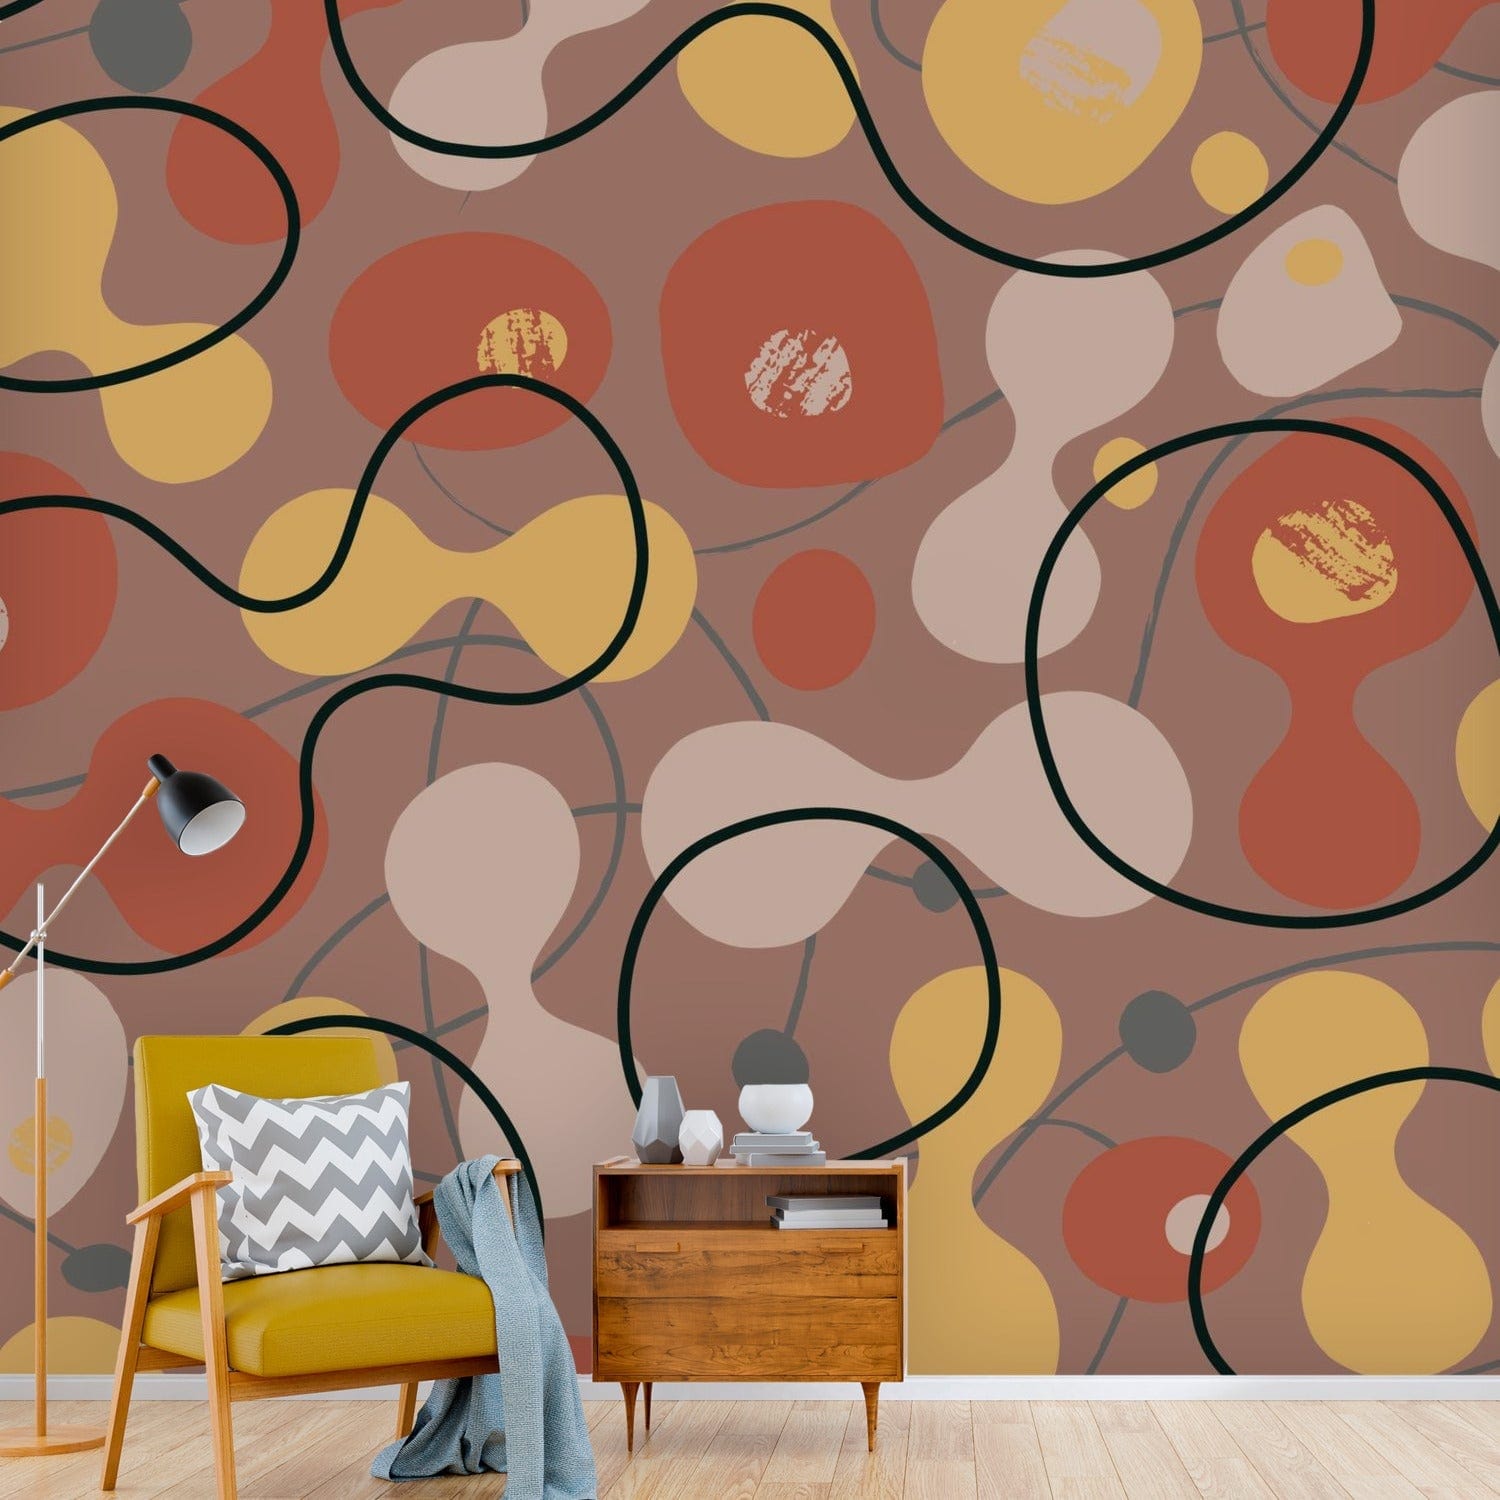 Mid Century Modern Wallpaper Boho Abstract Geometric, Brown, Yellow, Black, Beige, Terracotta Retro Peel And Stick Wallpaper Wallpaper H110 x W120